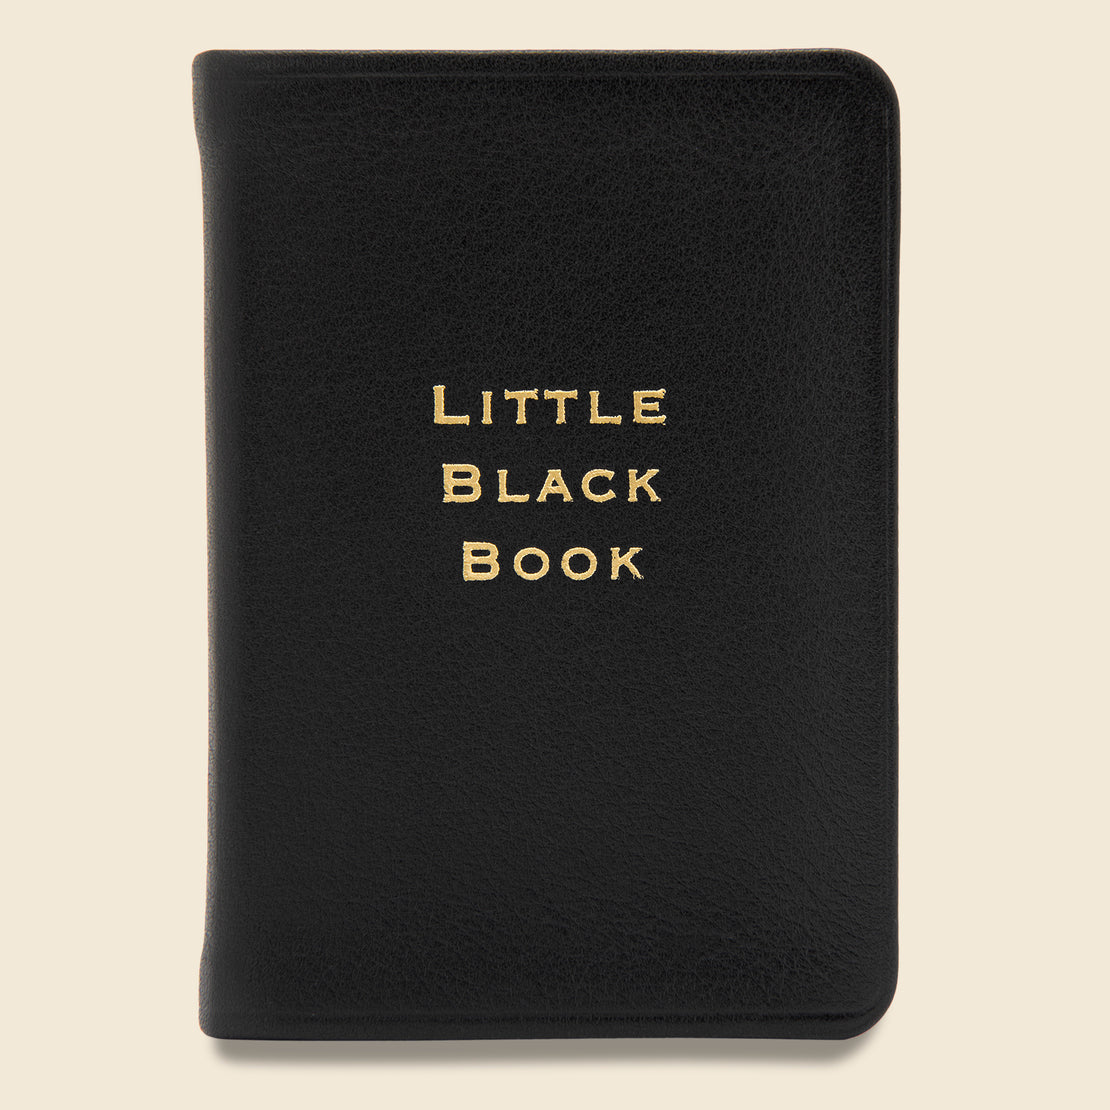 Paper Goods "LITTLE BLACK BOOK" Leather Journal - Black